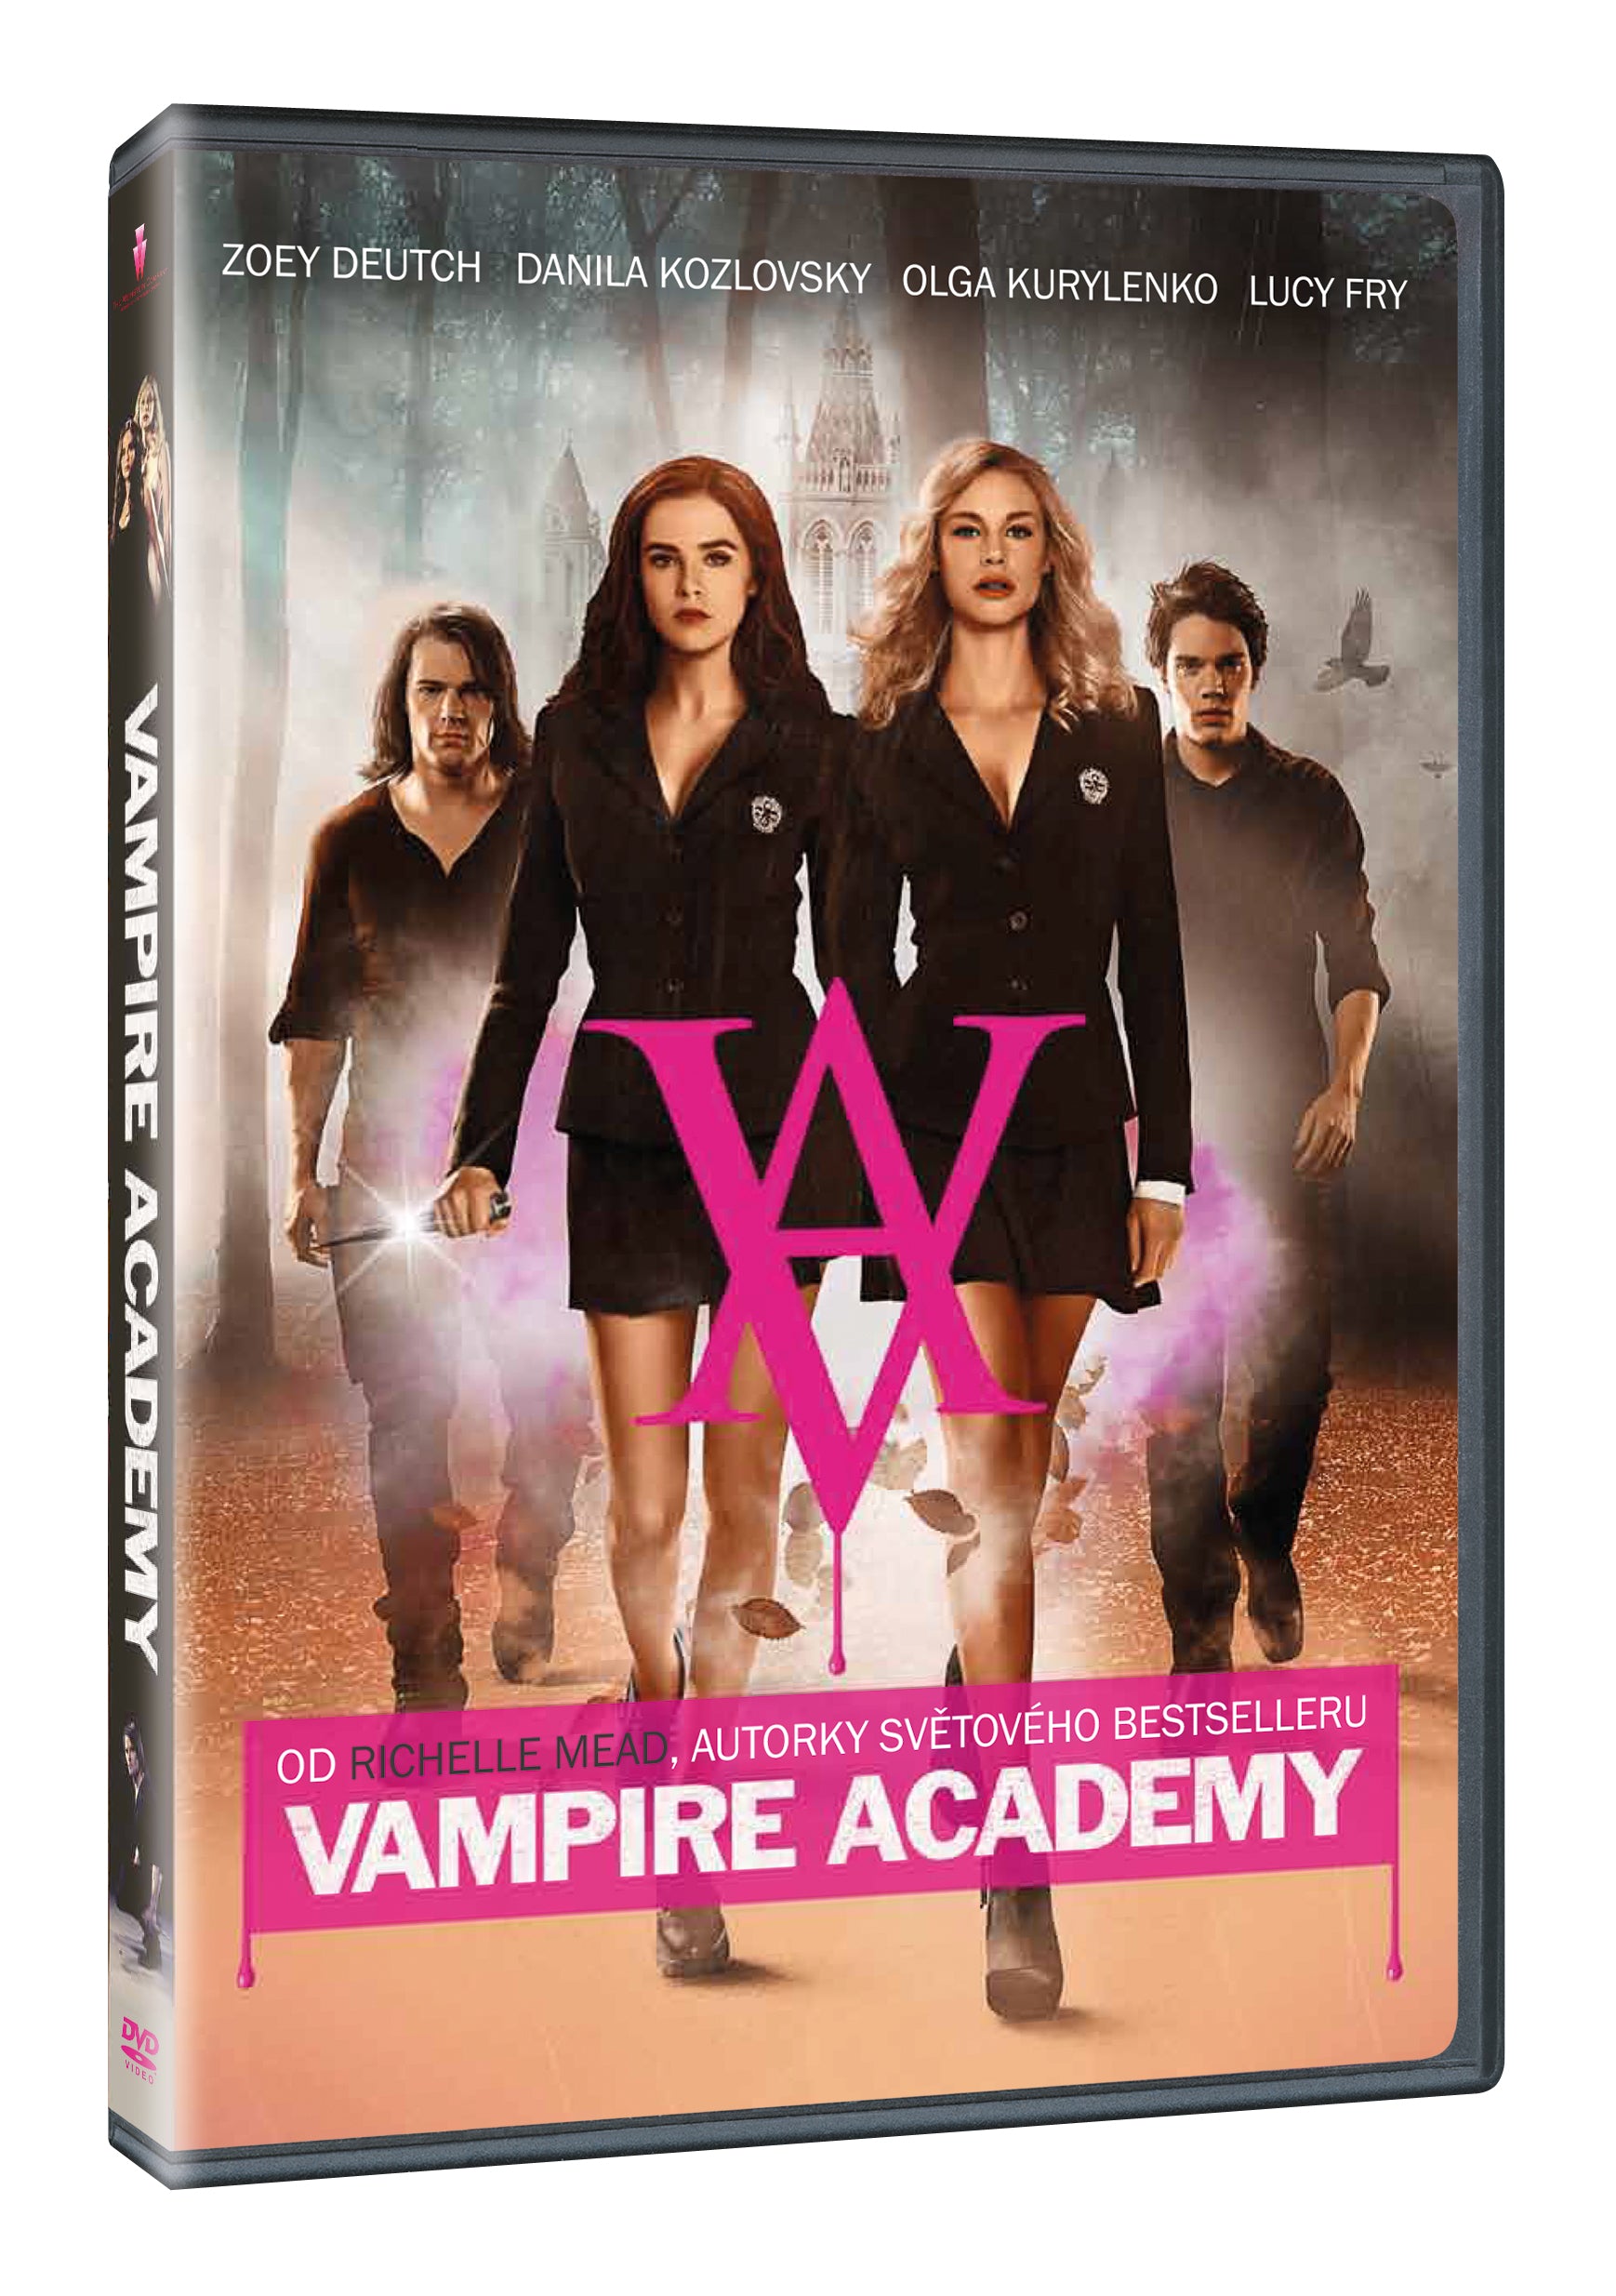 Vampire Academy DVD / Vampire academy